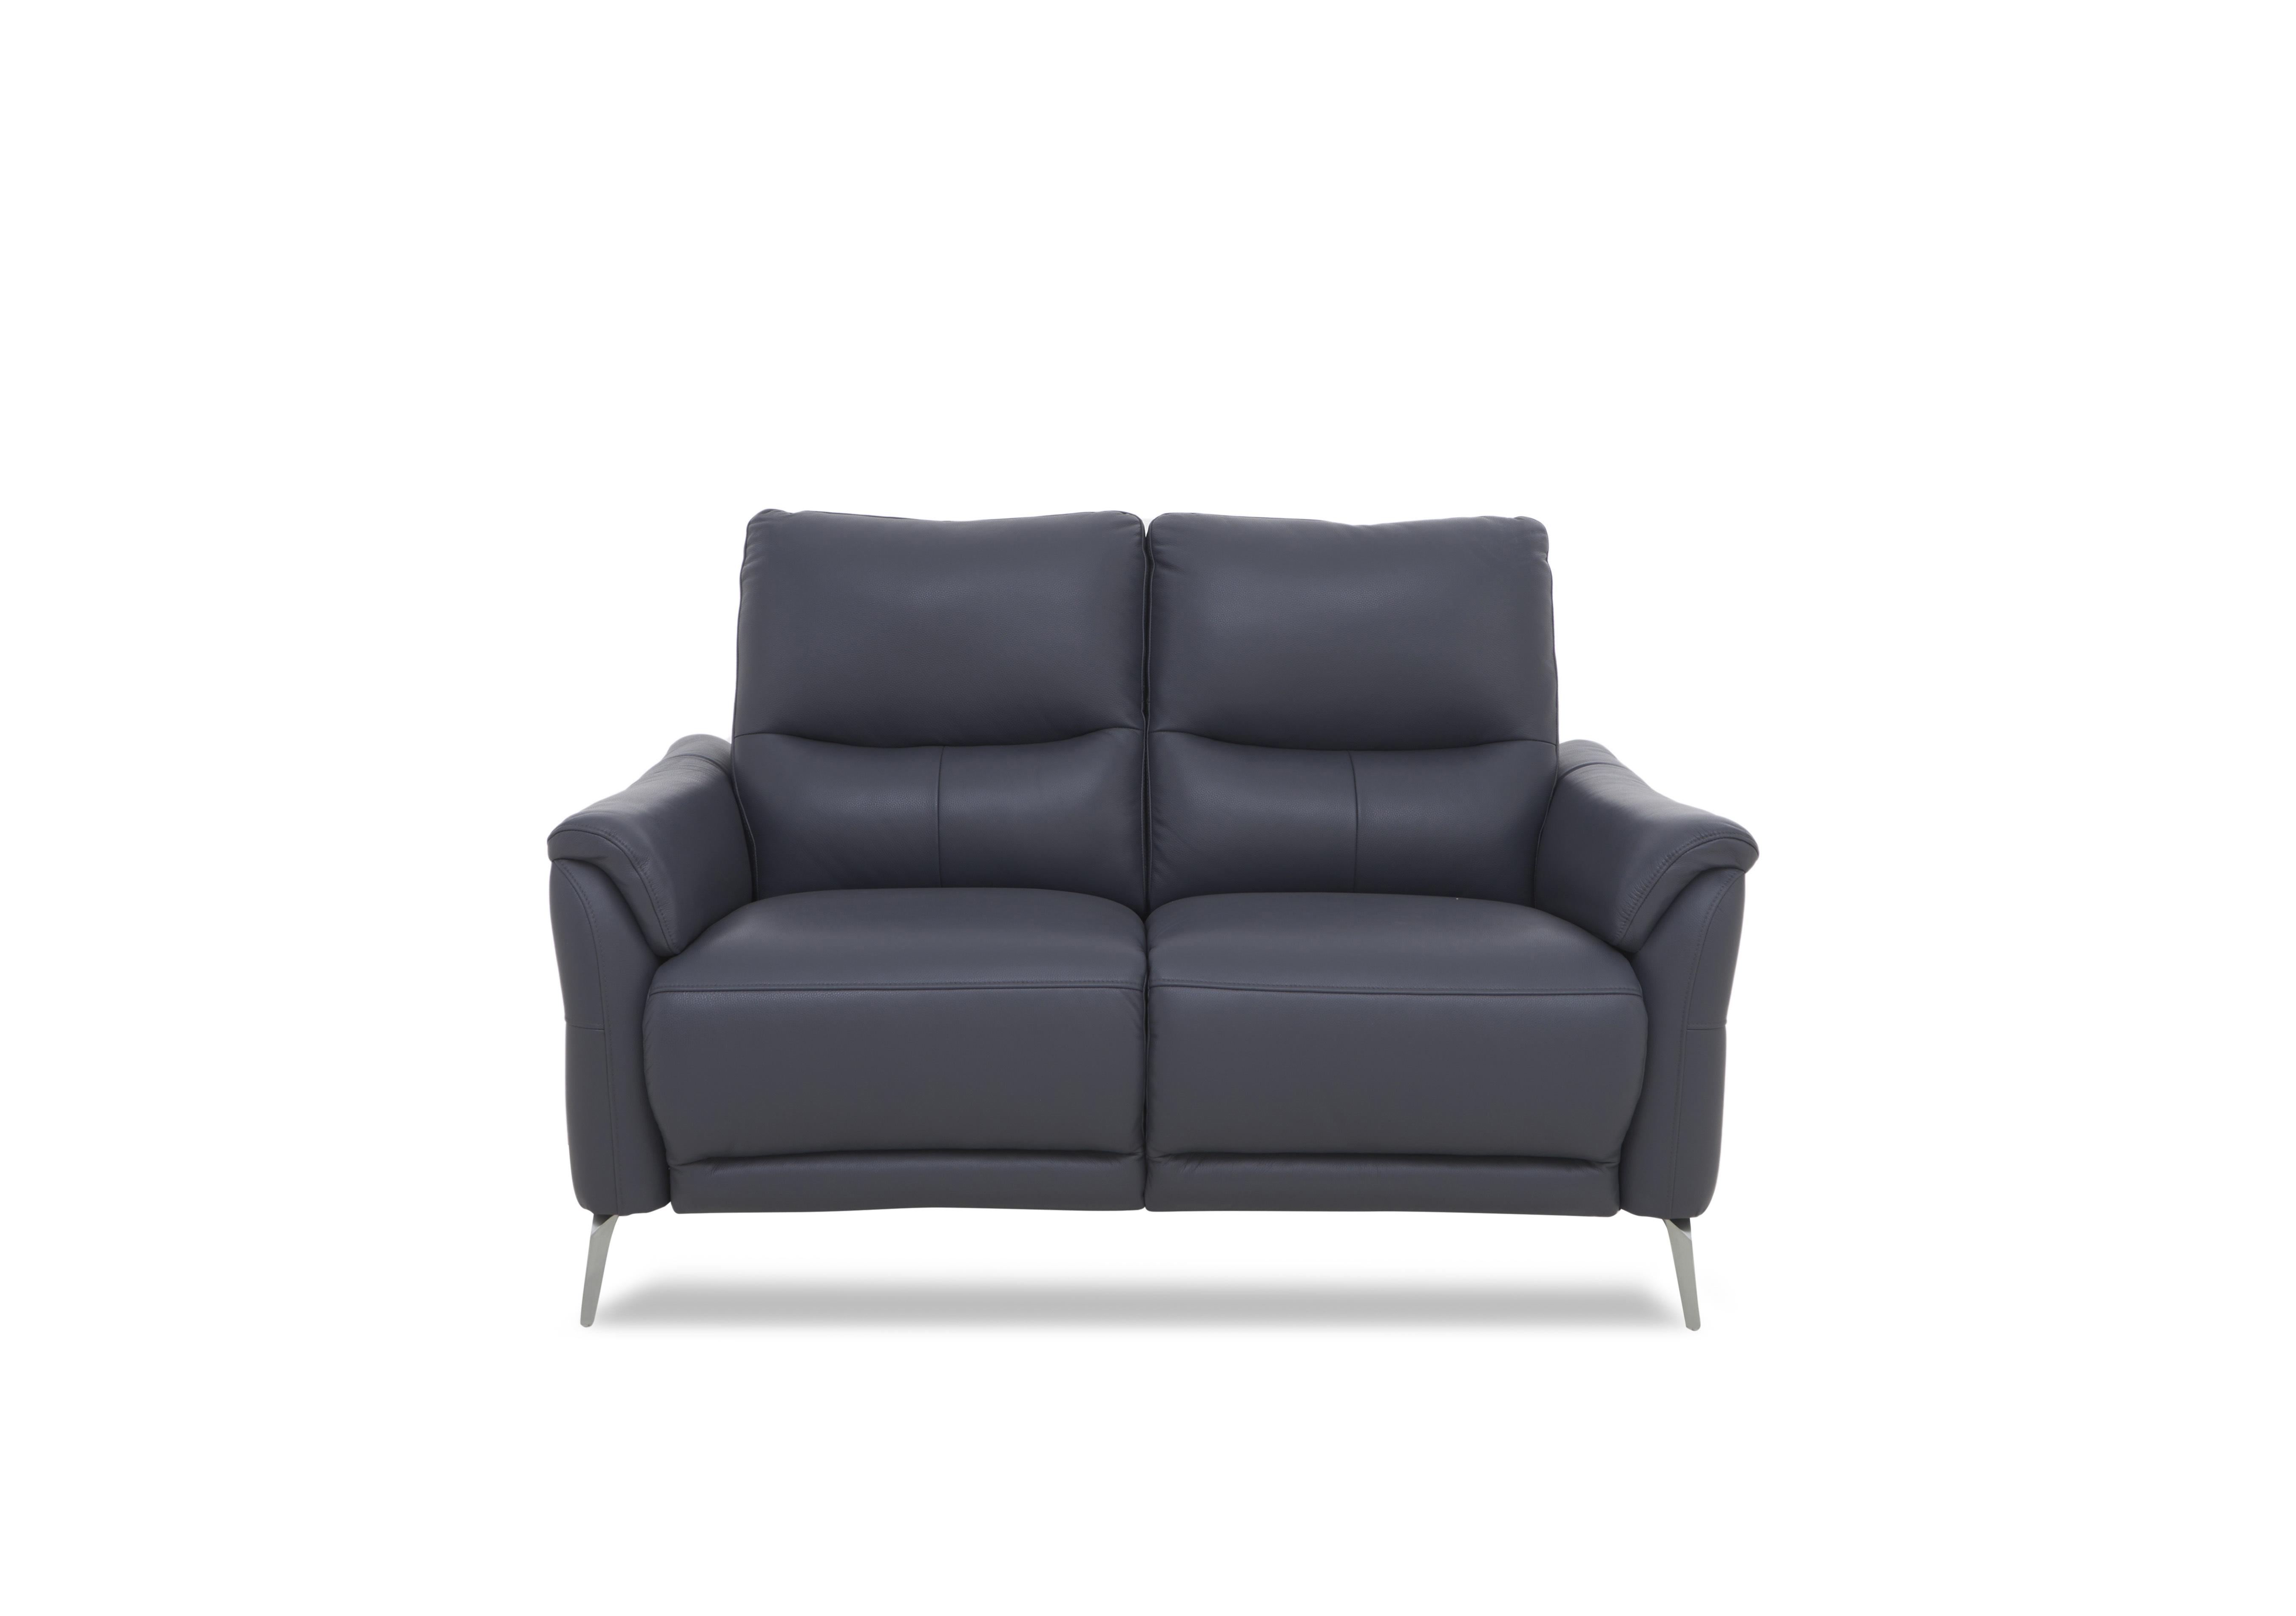 Daytona 2 Seater Leather Sofa in Cat-60/18 Lavender Grey on Furniture Village